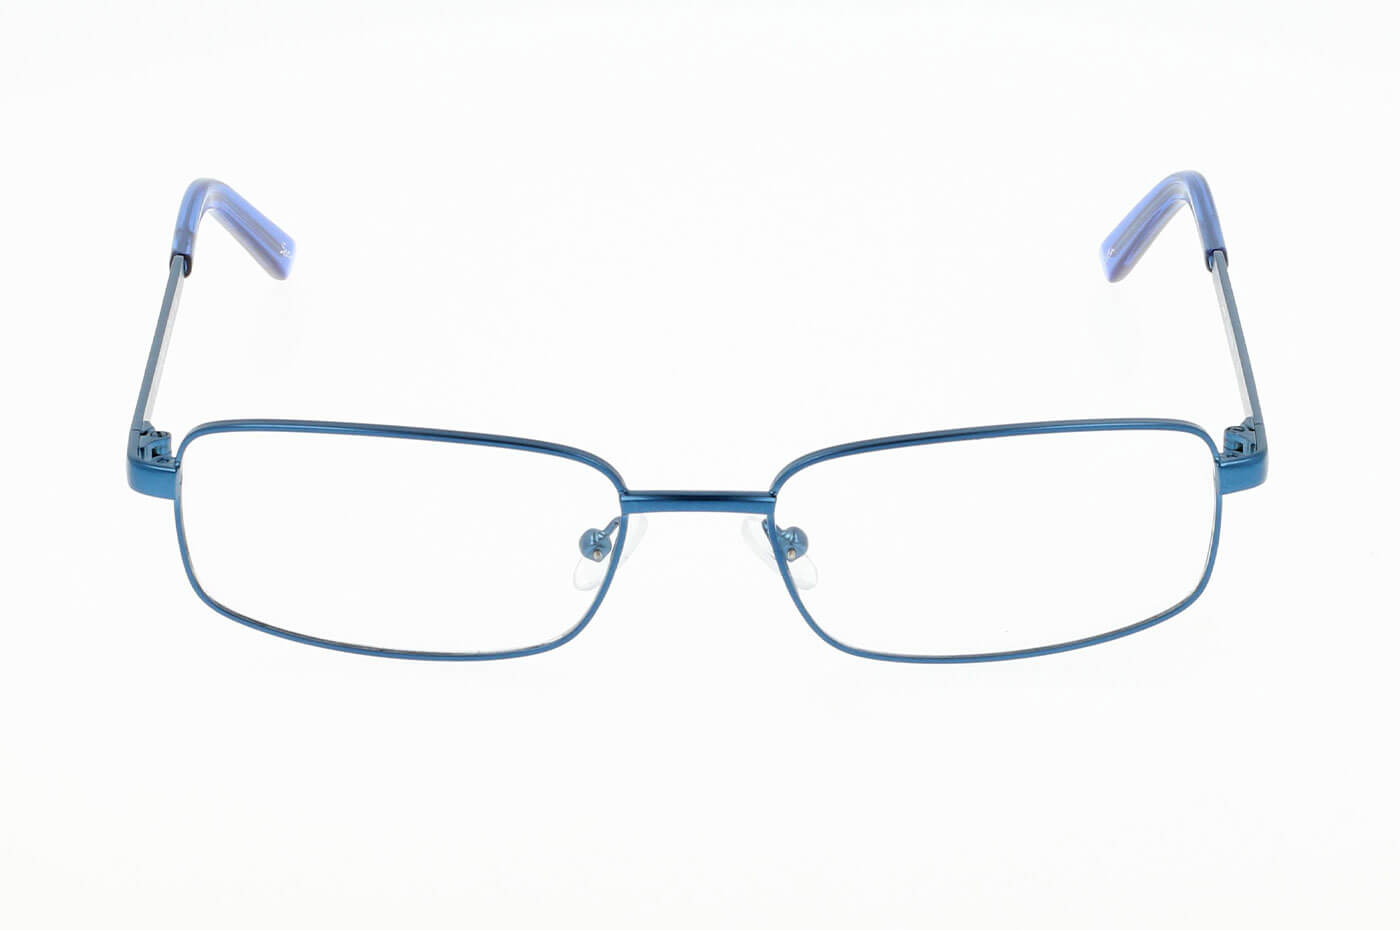 Vista-1 - Gafas oftálmicas Seen BP_EM06 Hombre Color Azul / Incluye lentes filtro luz azul violeta